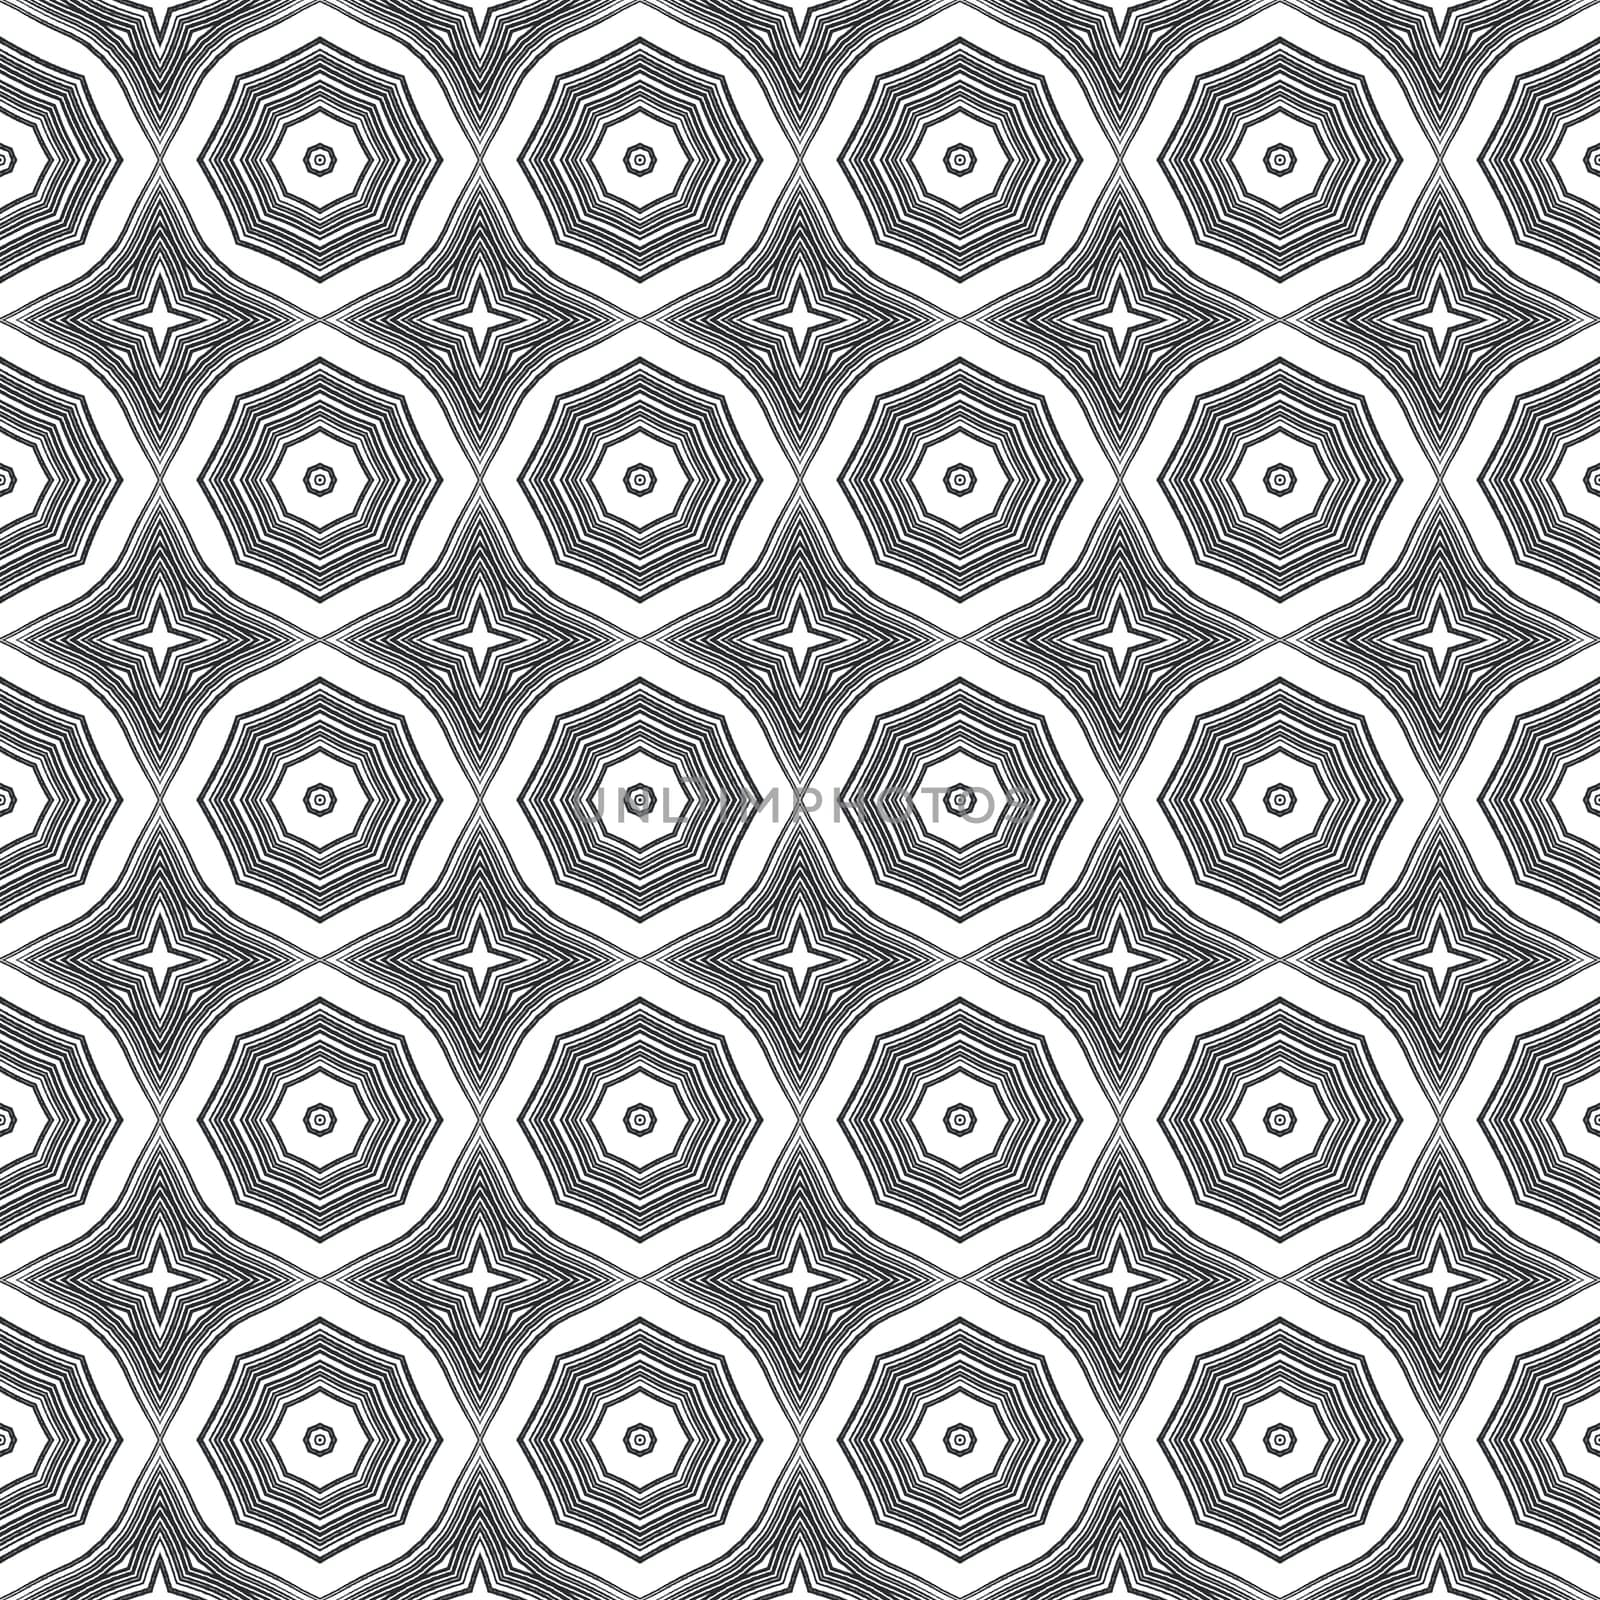 Striped hand drawn pattern. Black symmetrical by beginagain